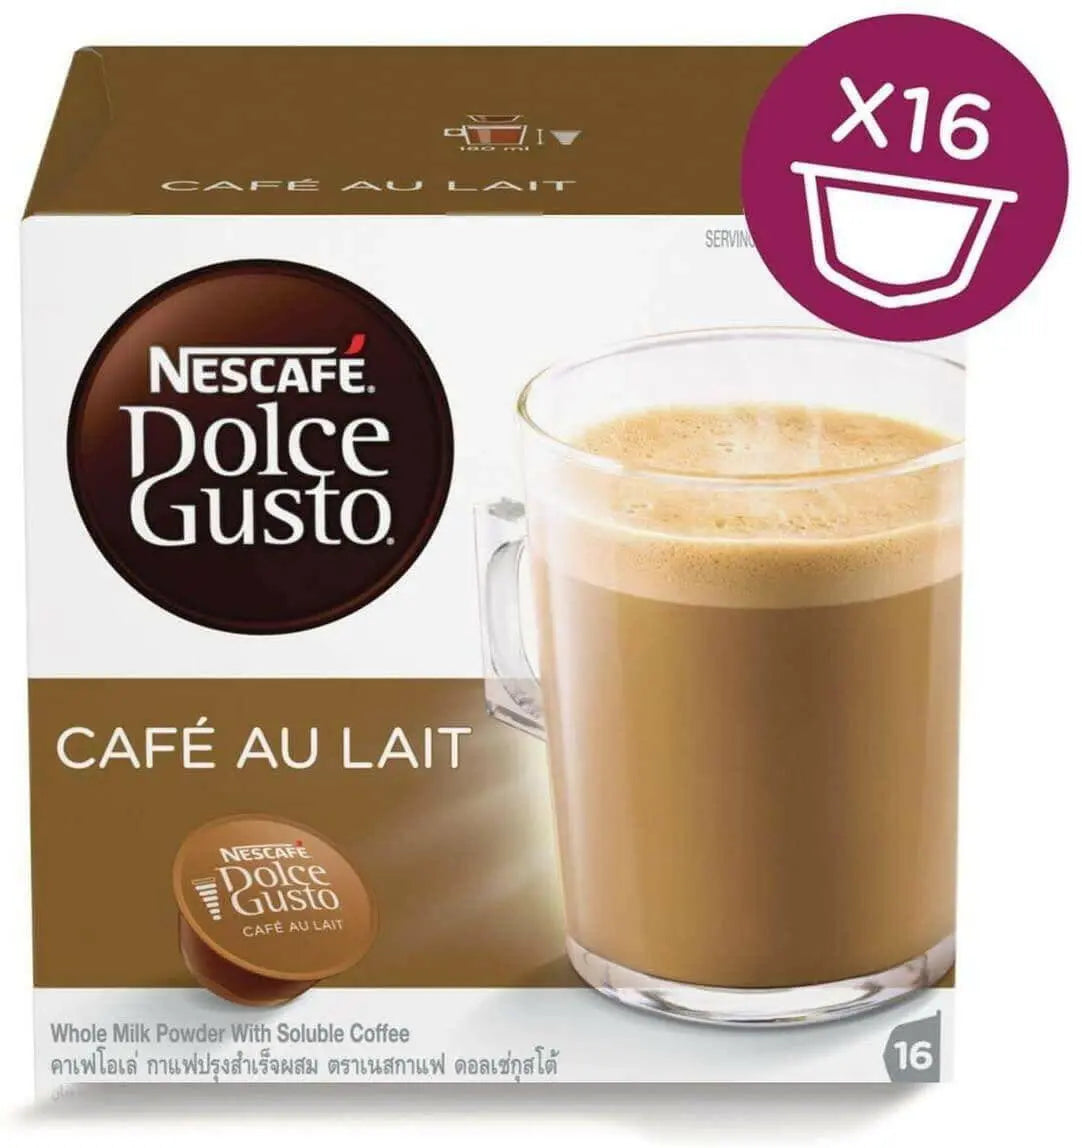 Nescafe Dolce Gusto Cafe Au Lait - 3 X 16 Capsules